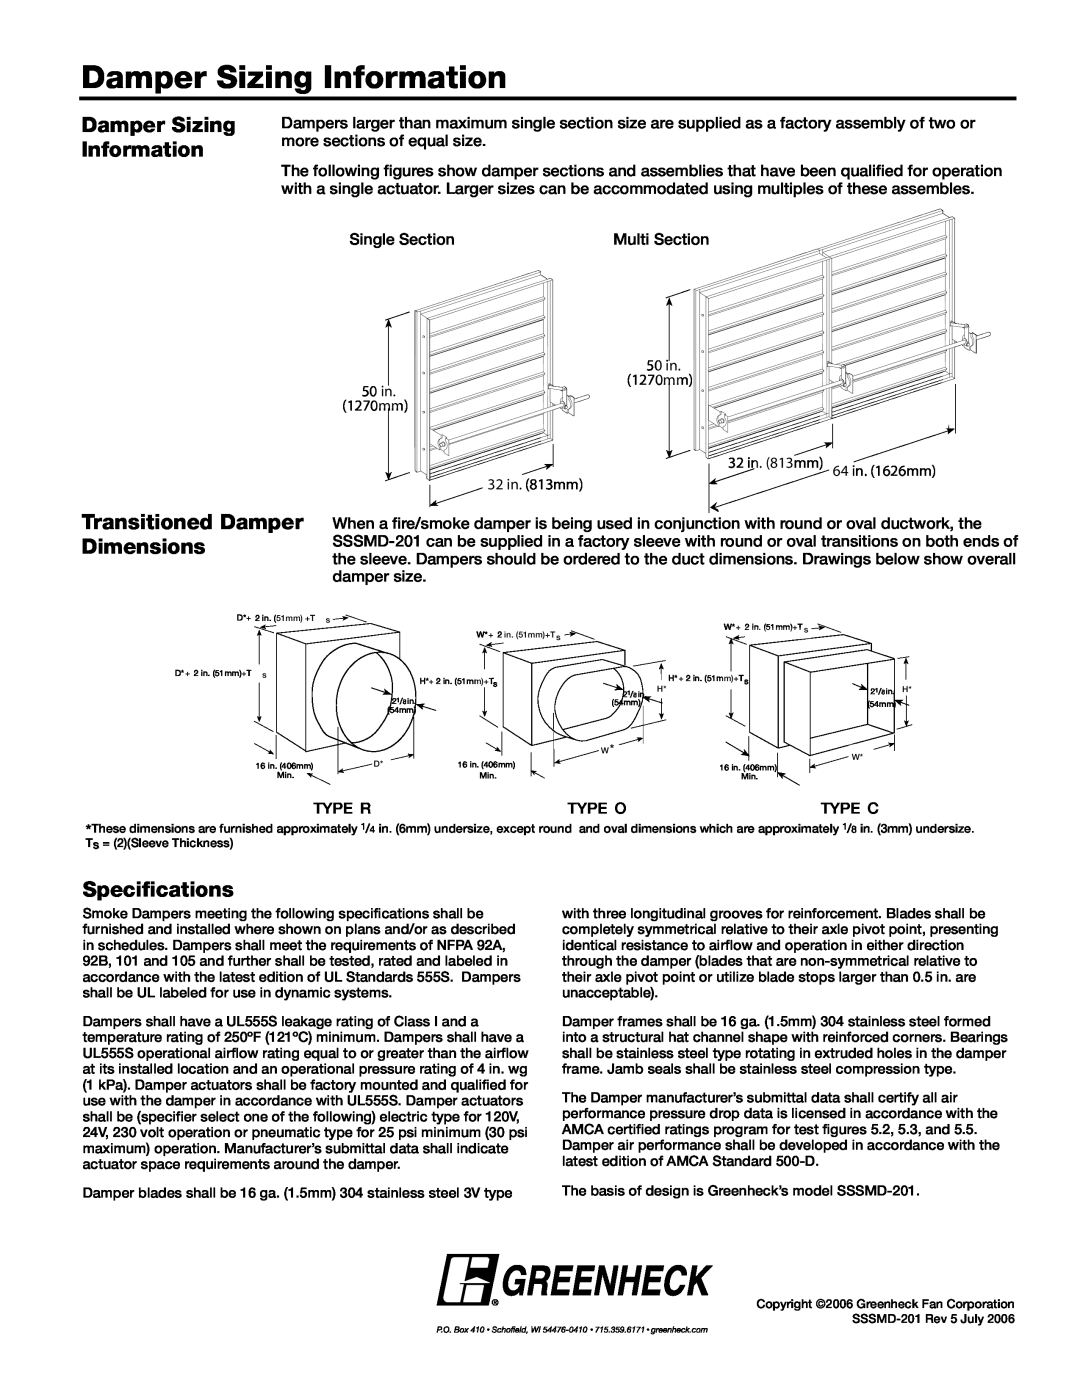 Greenheck Fan SSSMD-201 dimensions Damper Sizing Information, Transitioned Damper Dimensions, Specifications 